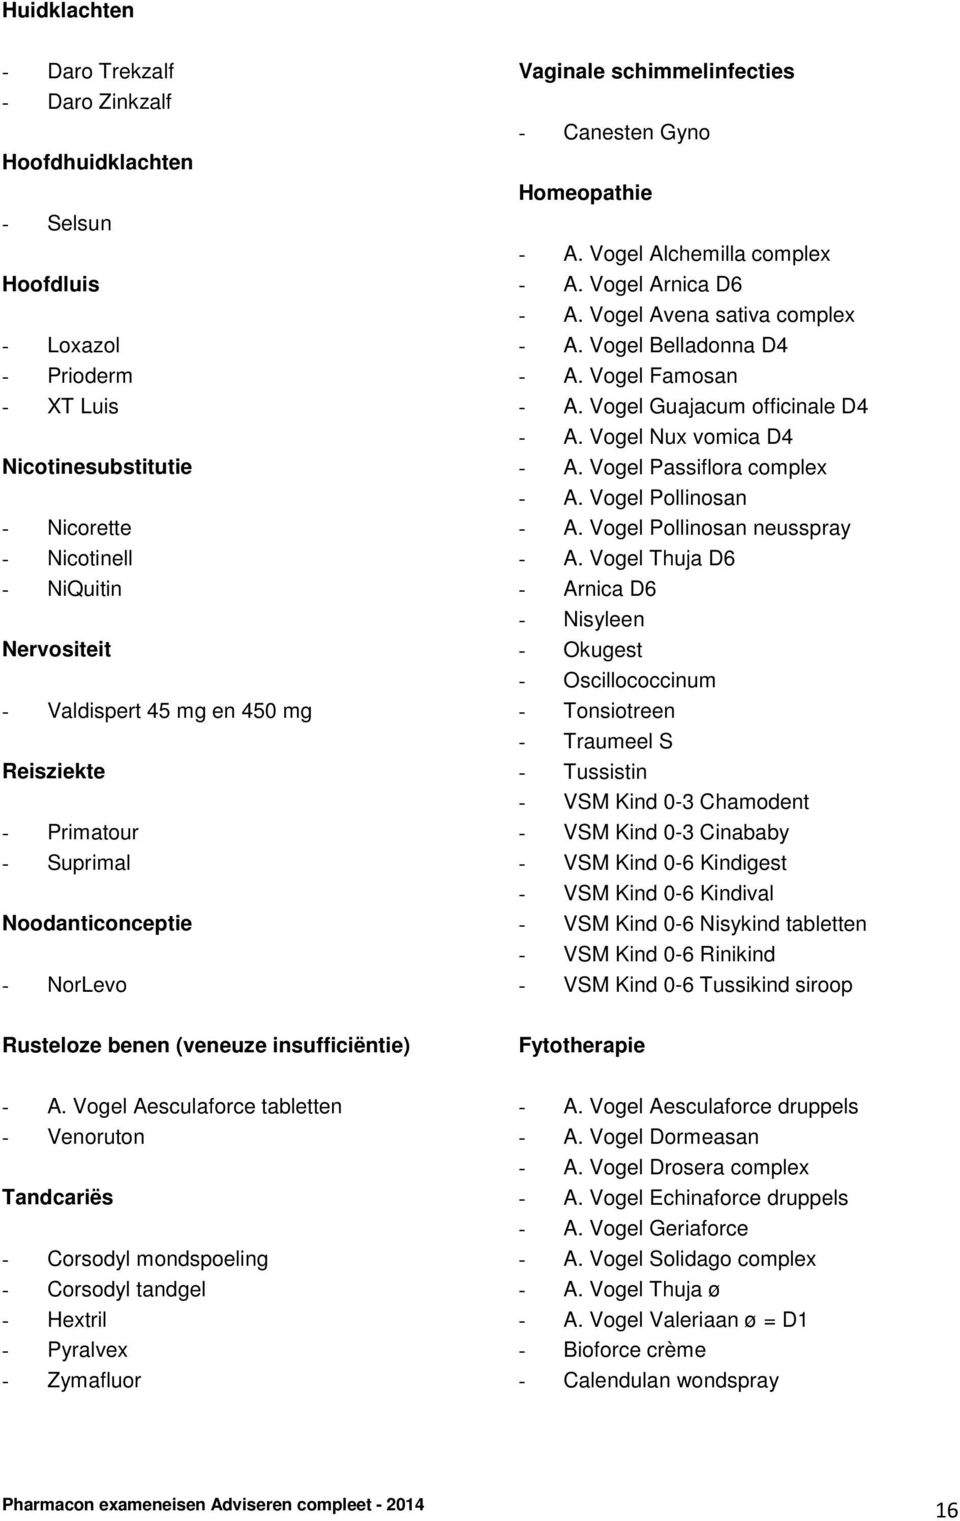 Vogel Aesculaforce tabletten - Venoruton Tandcariës - Corsodyl mondspoeling - Corsodyl tandgel - Hextril - Pyralvex - Zymafluor Vaginale schimmelinfecties - Canesten Gyno Homeopathie - A.